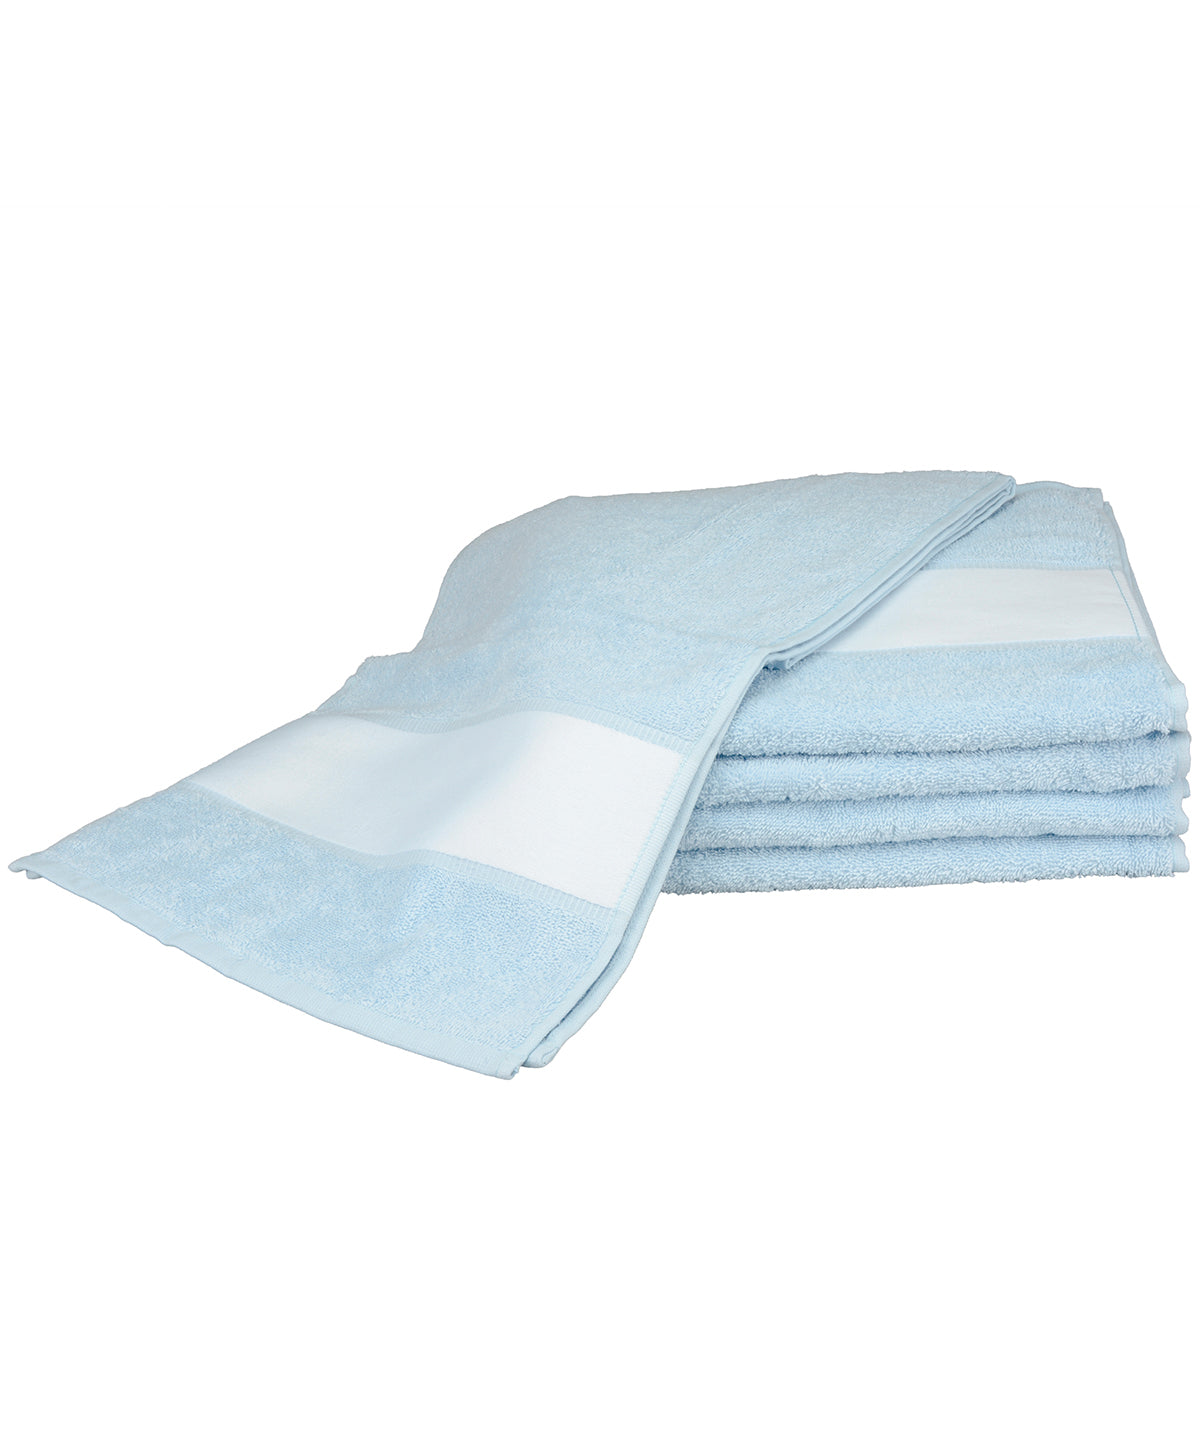 Personalised Towels - Light Blue A&R Towels ARTG® SUBLI-Me® sport towel